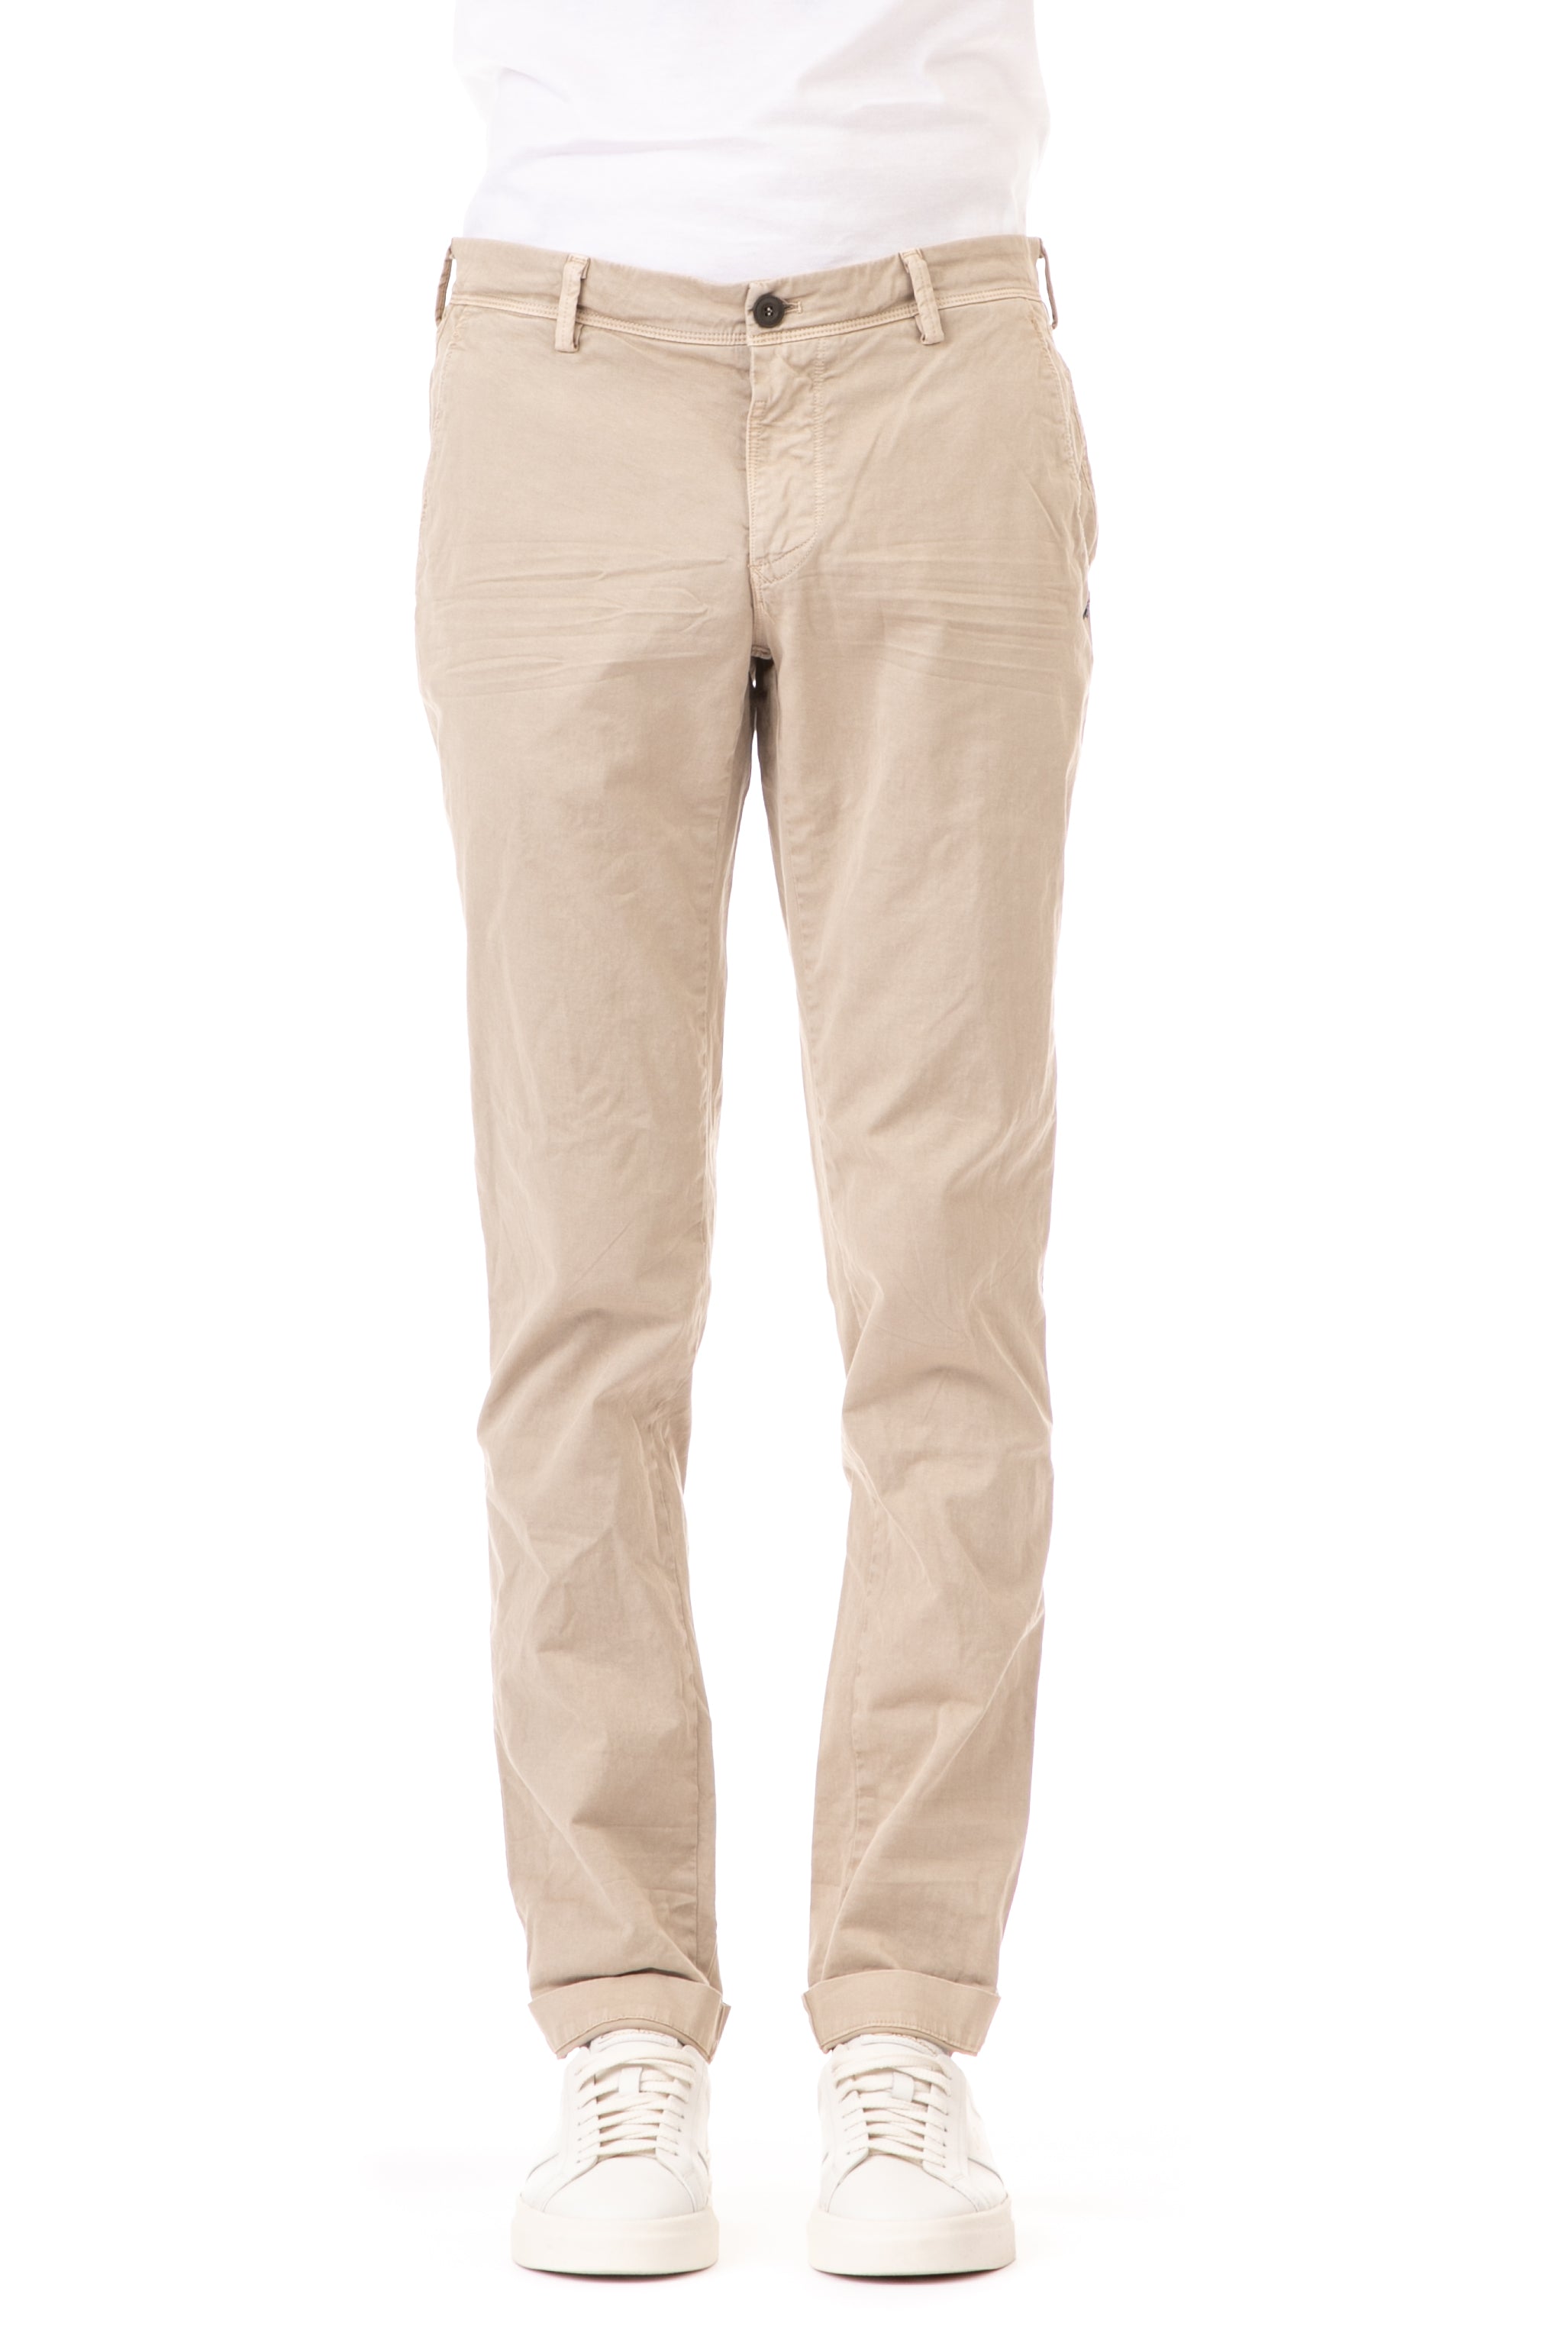 Eisenhower model cotton-lyocell trousers